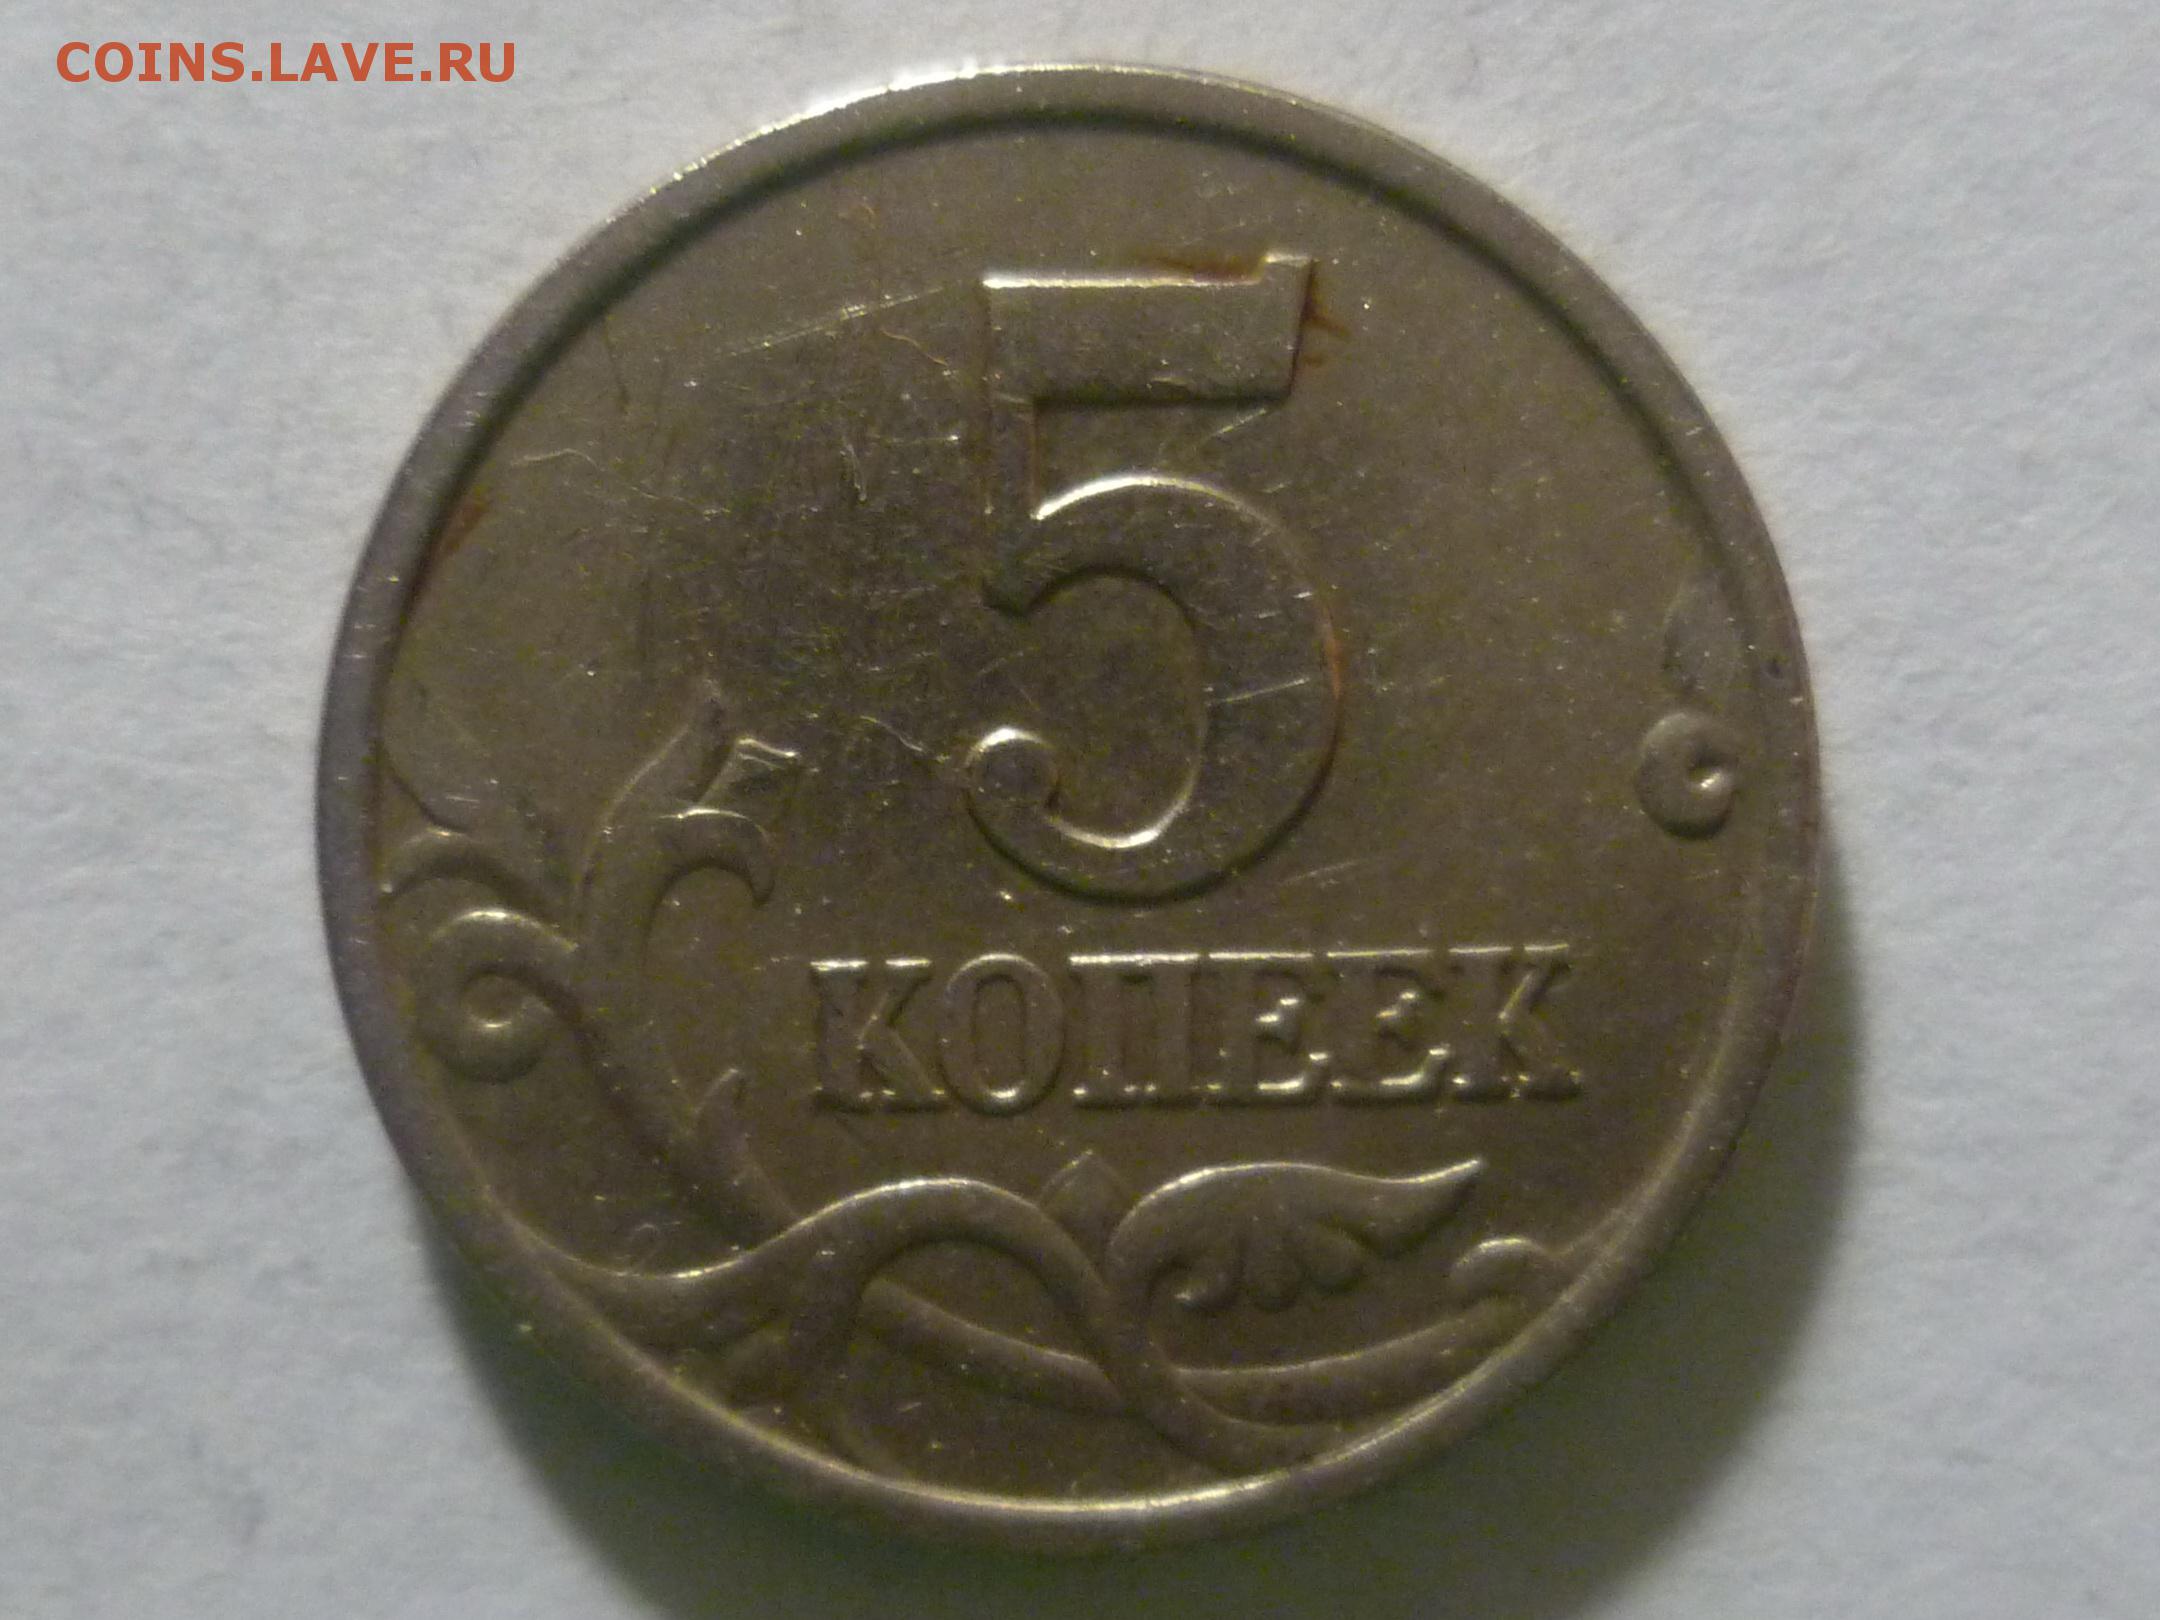 4 рубля 5 копеек. 5 Рублей 2009 ММД немагнитная. Монета 5 копеек 1998 года СПМД. 5 Копеек 2000 м. 5 Копеек 1997 м.